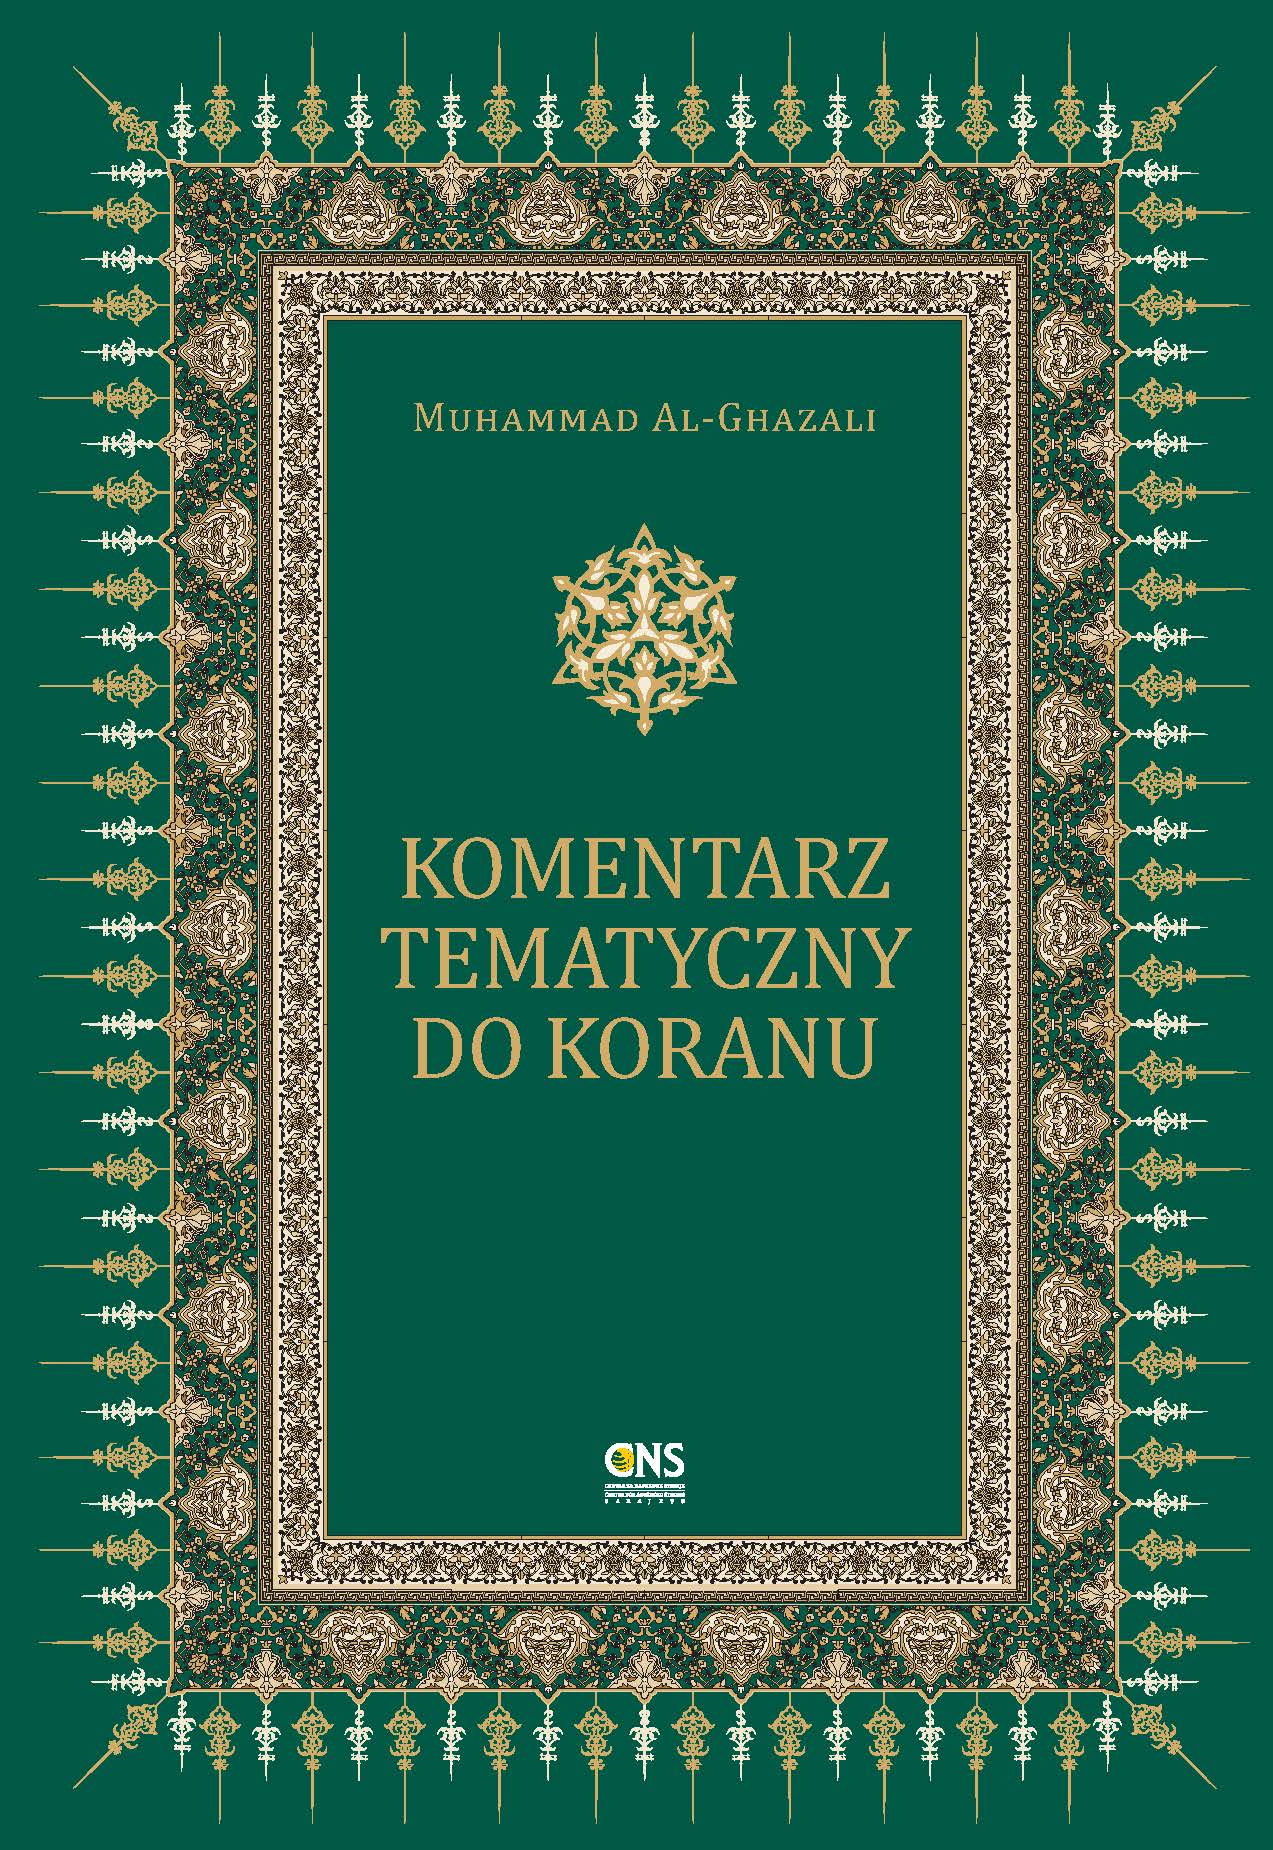 (Polish Language) Komentarz tematyczny do Koranu (A Thematic Commentary on the Quran)